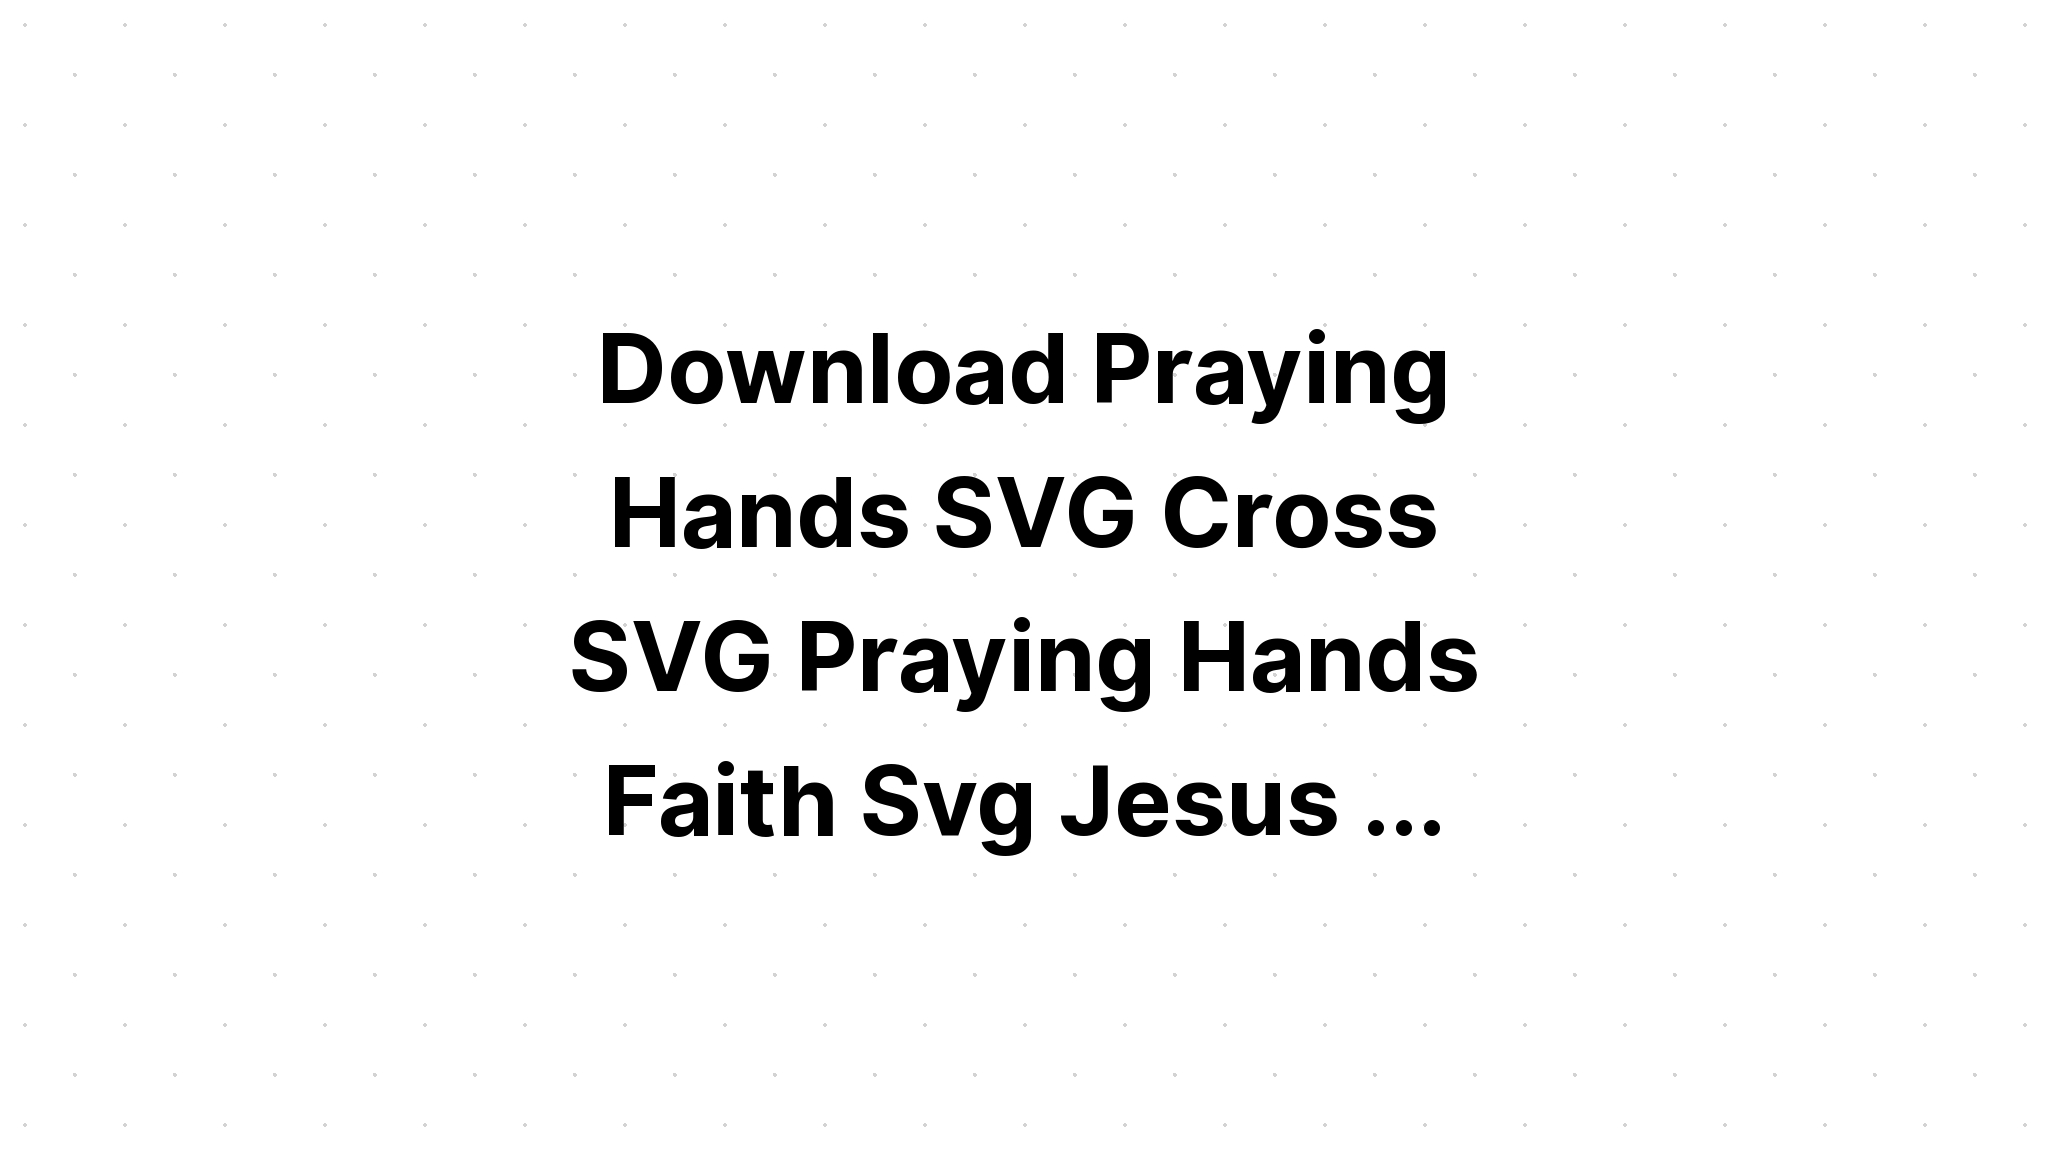 Download Praying Hands Svg - Layered SVG Cut File